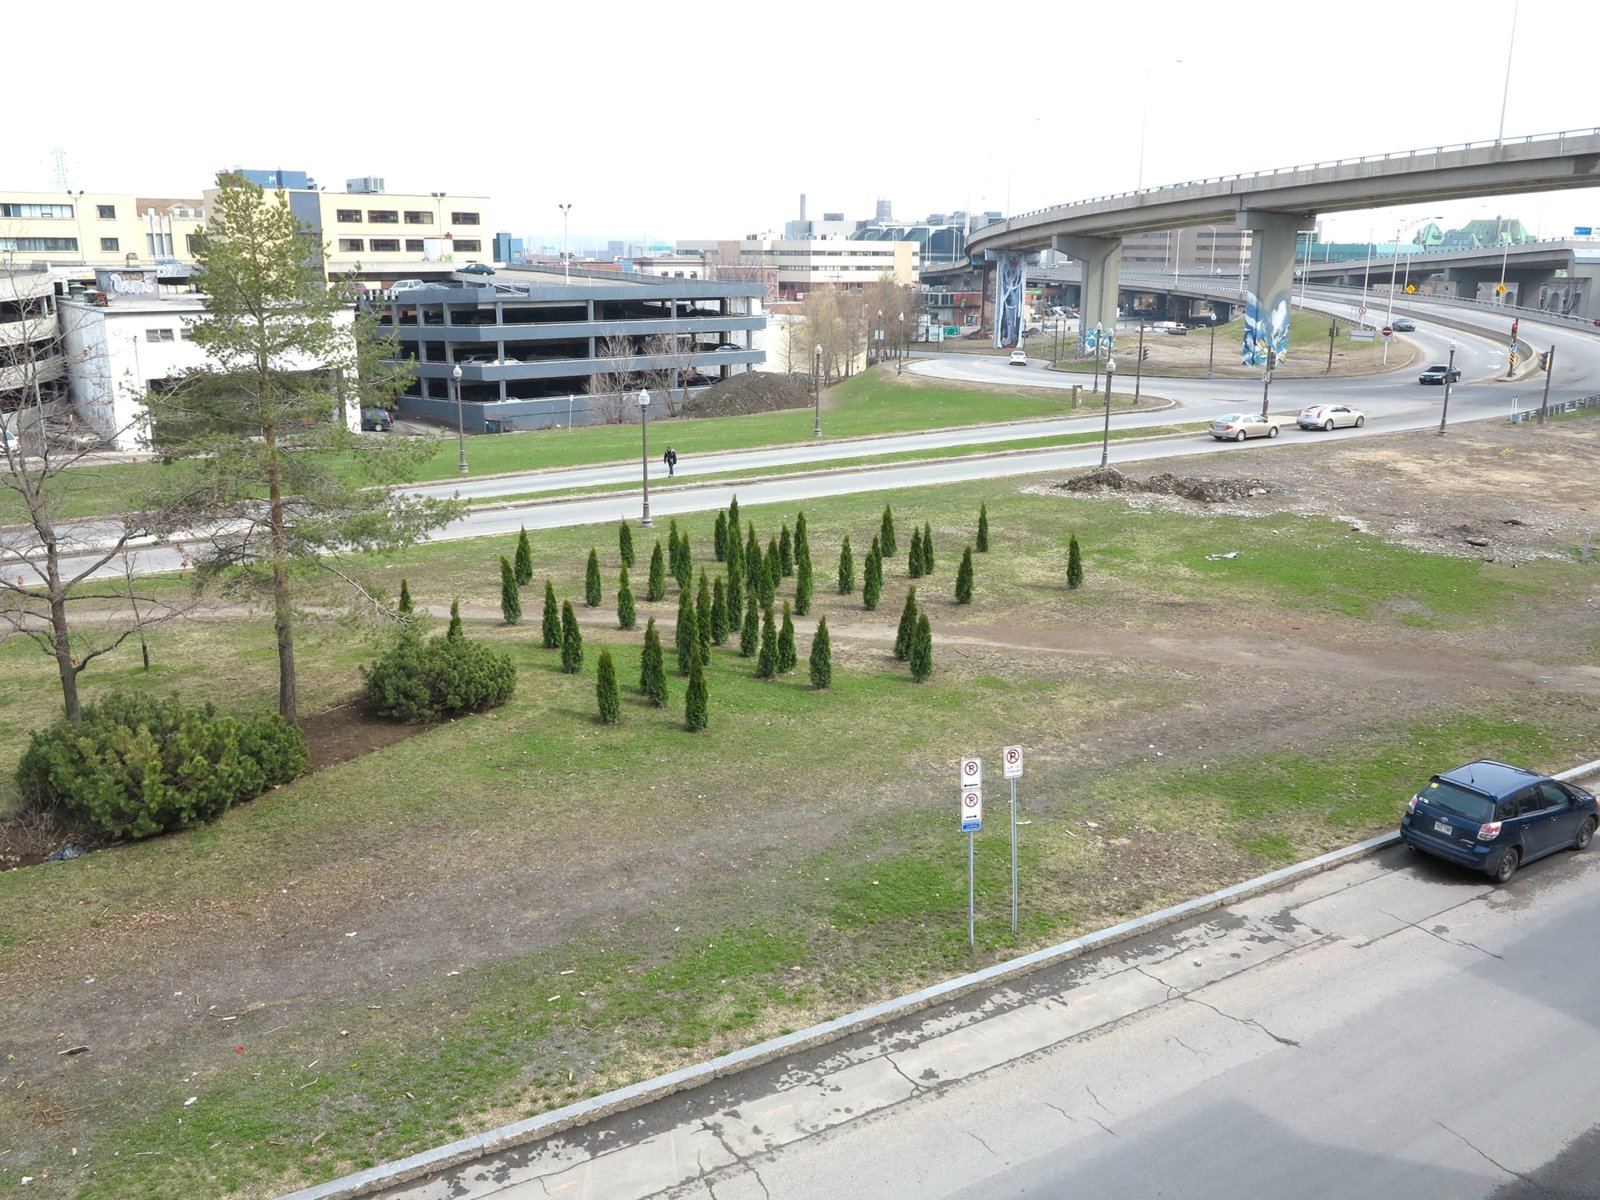 Abbas Akhavan, Variations on Untitled Garden, 2014, emerald cedar trees, dimensions variable. Installation view, Manif d’art 7, Quebec City, Canada, 2014